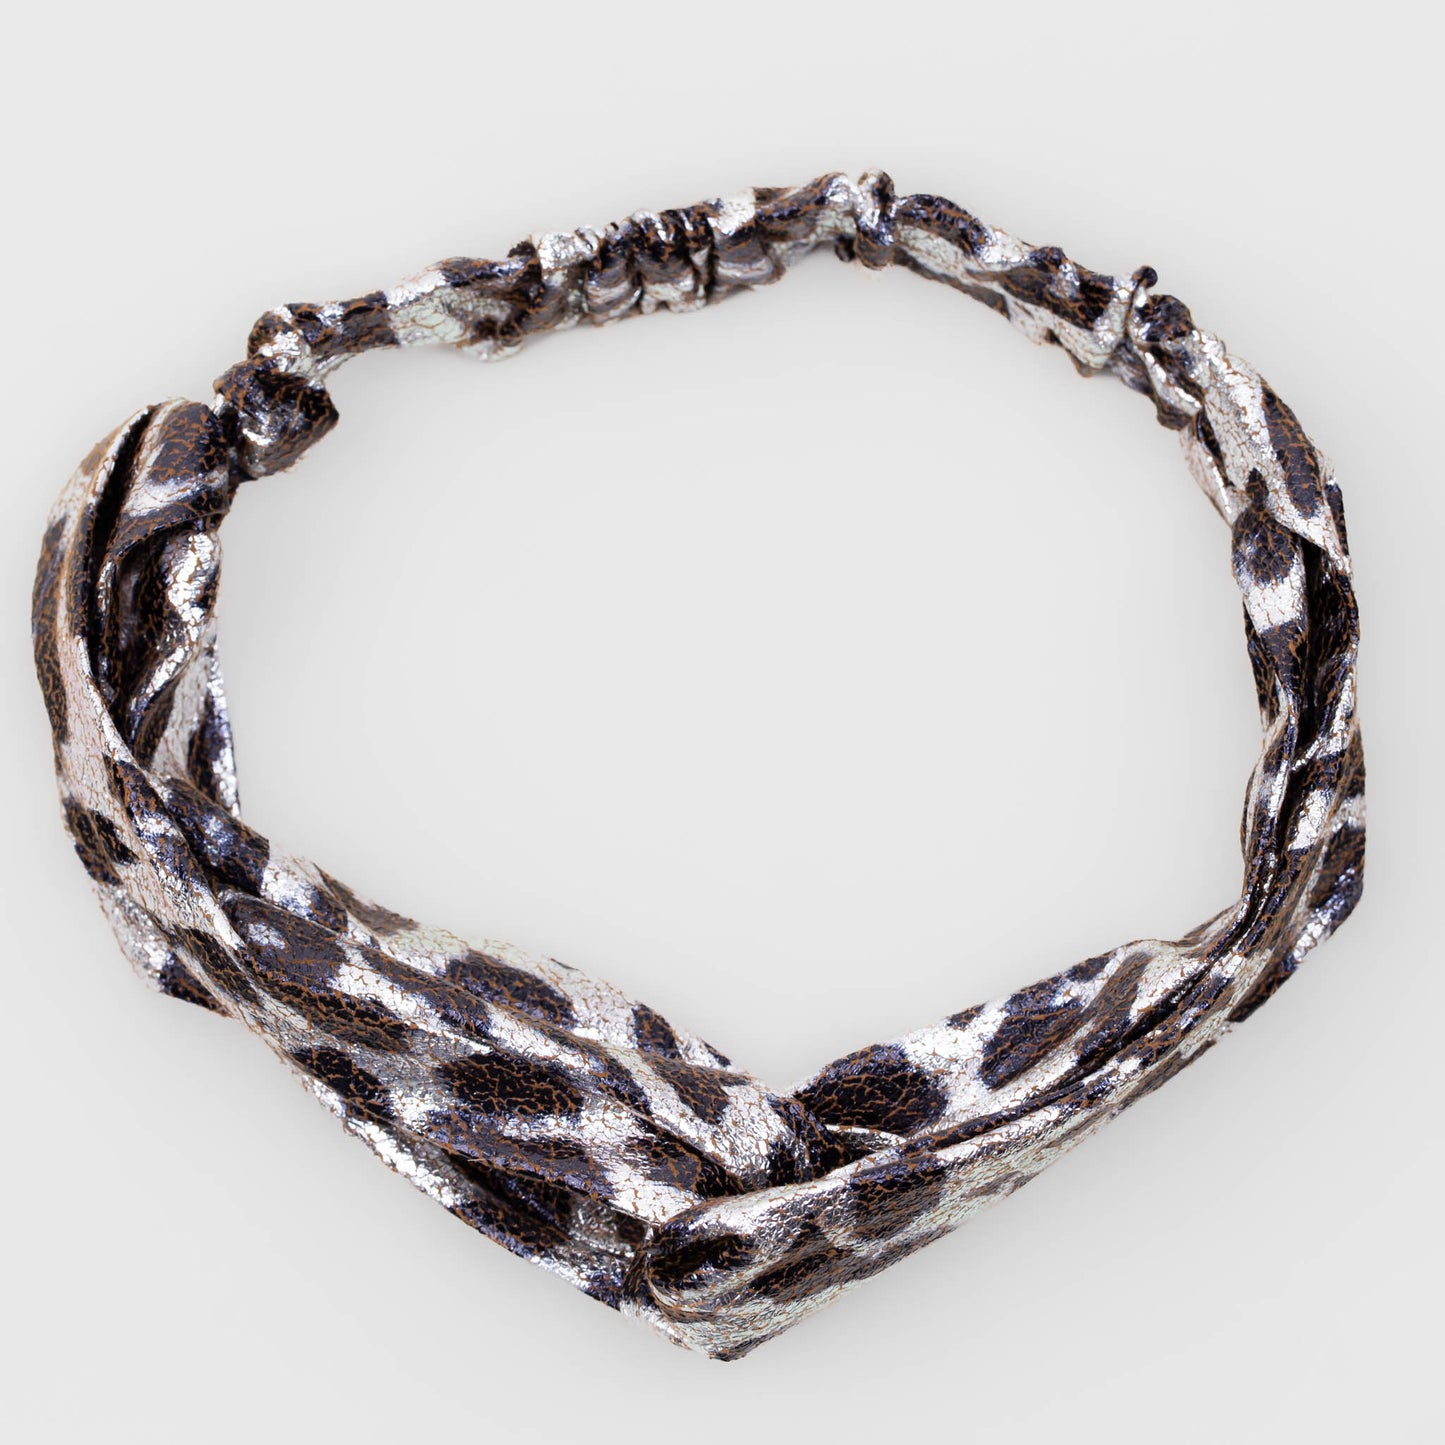 Bentiță de păr cu nod tip turban și material texturat animal print - Argintiu